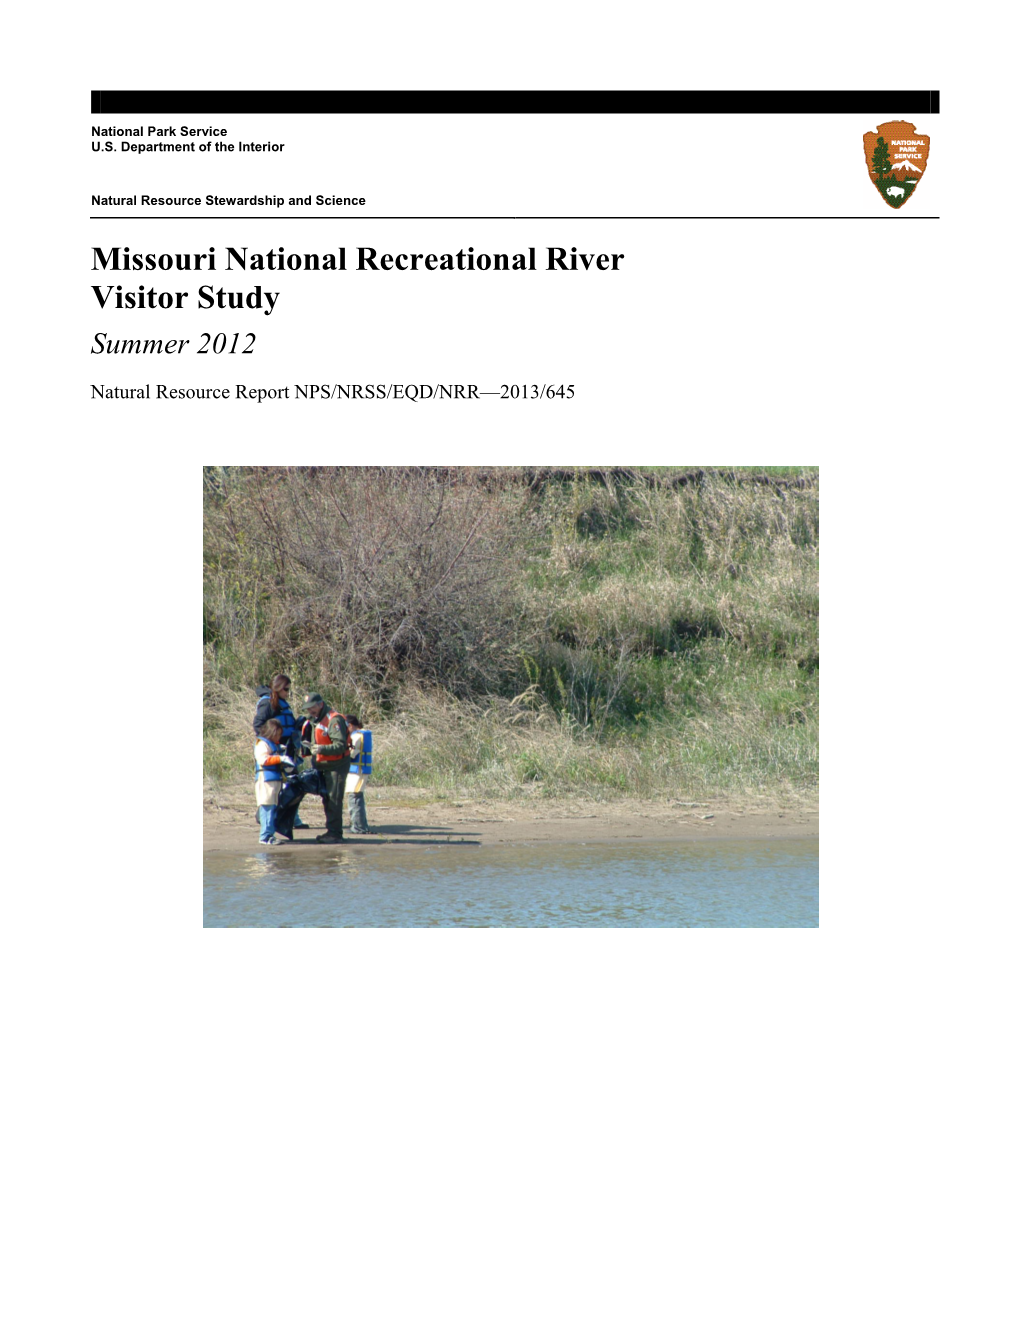 Missouri National Recreational River Visitor Study Summer 2012